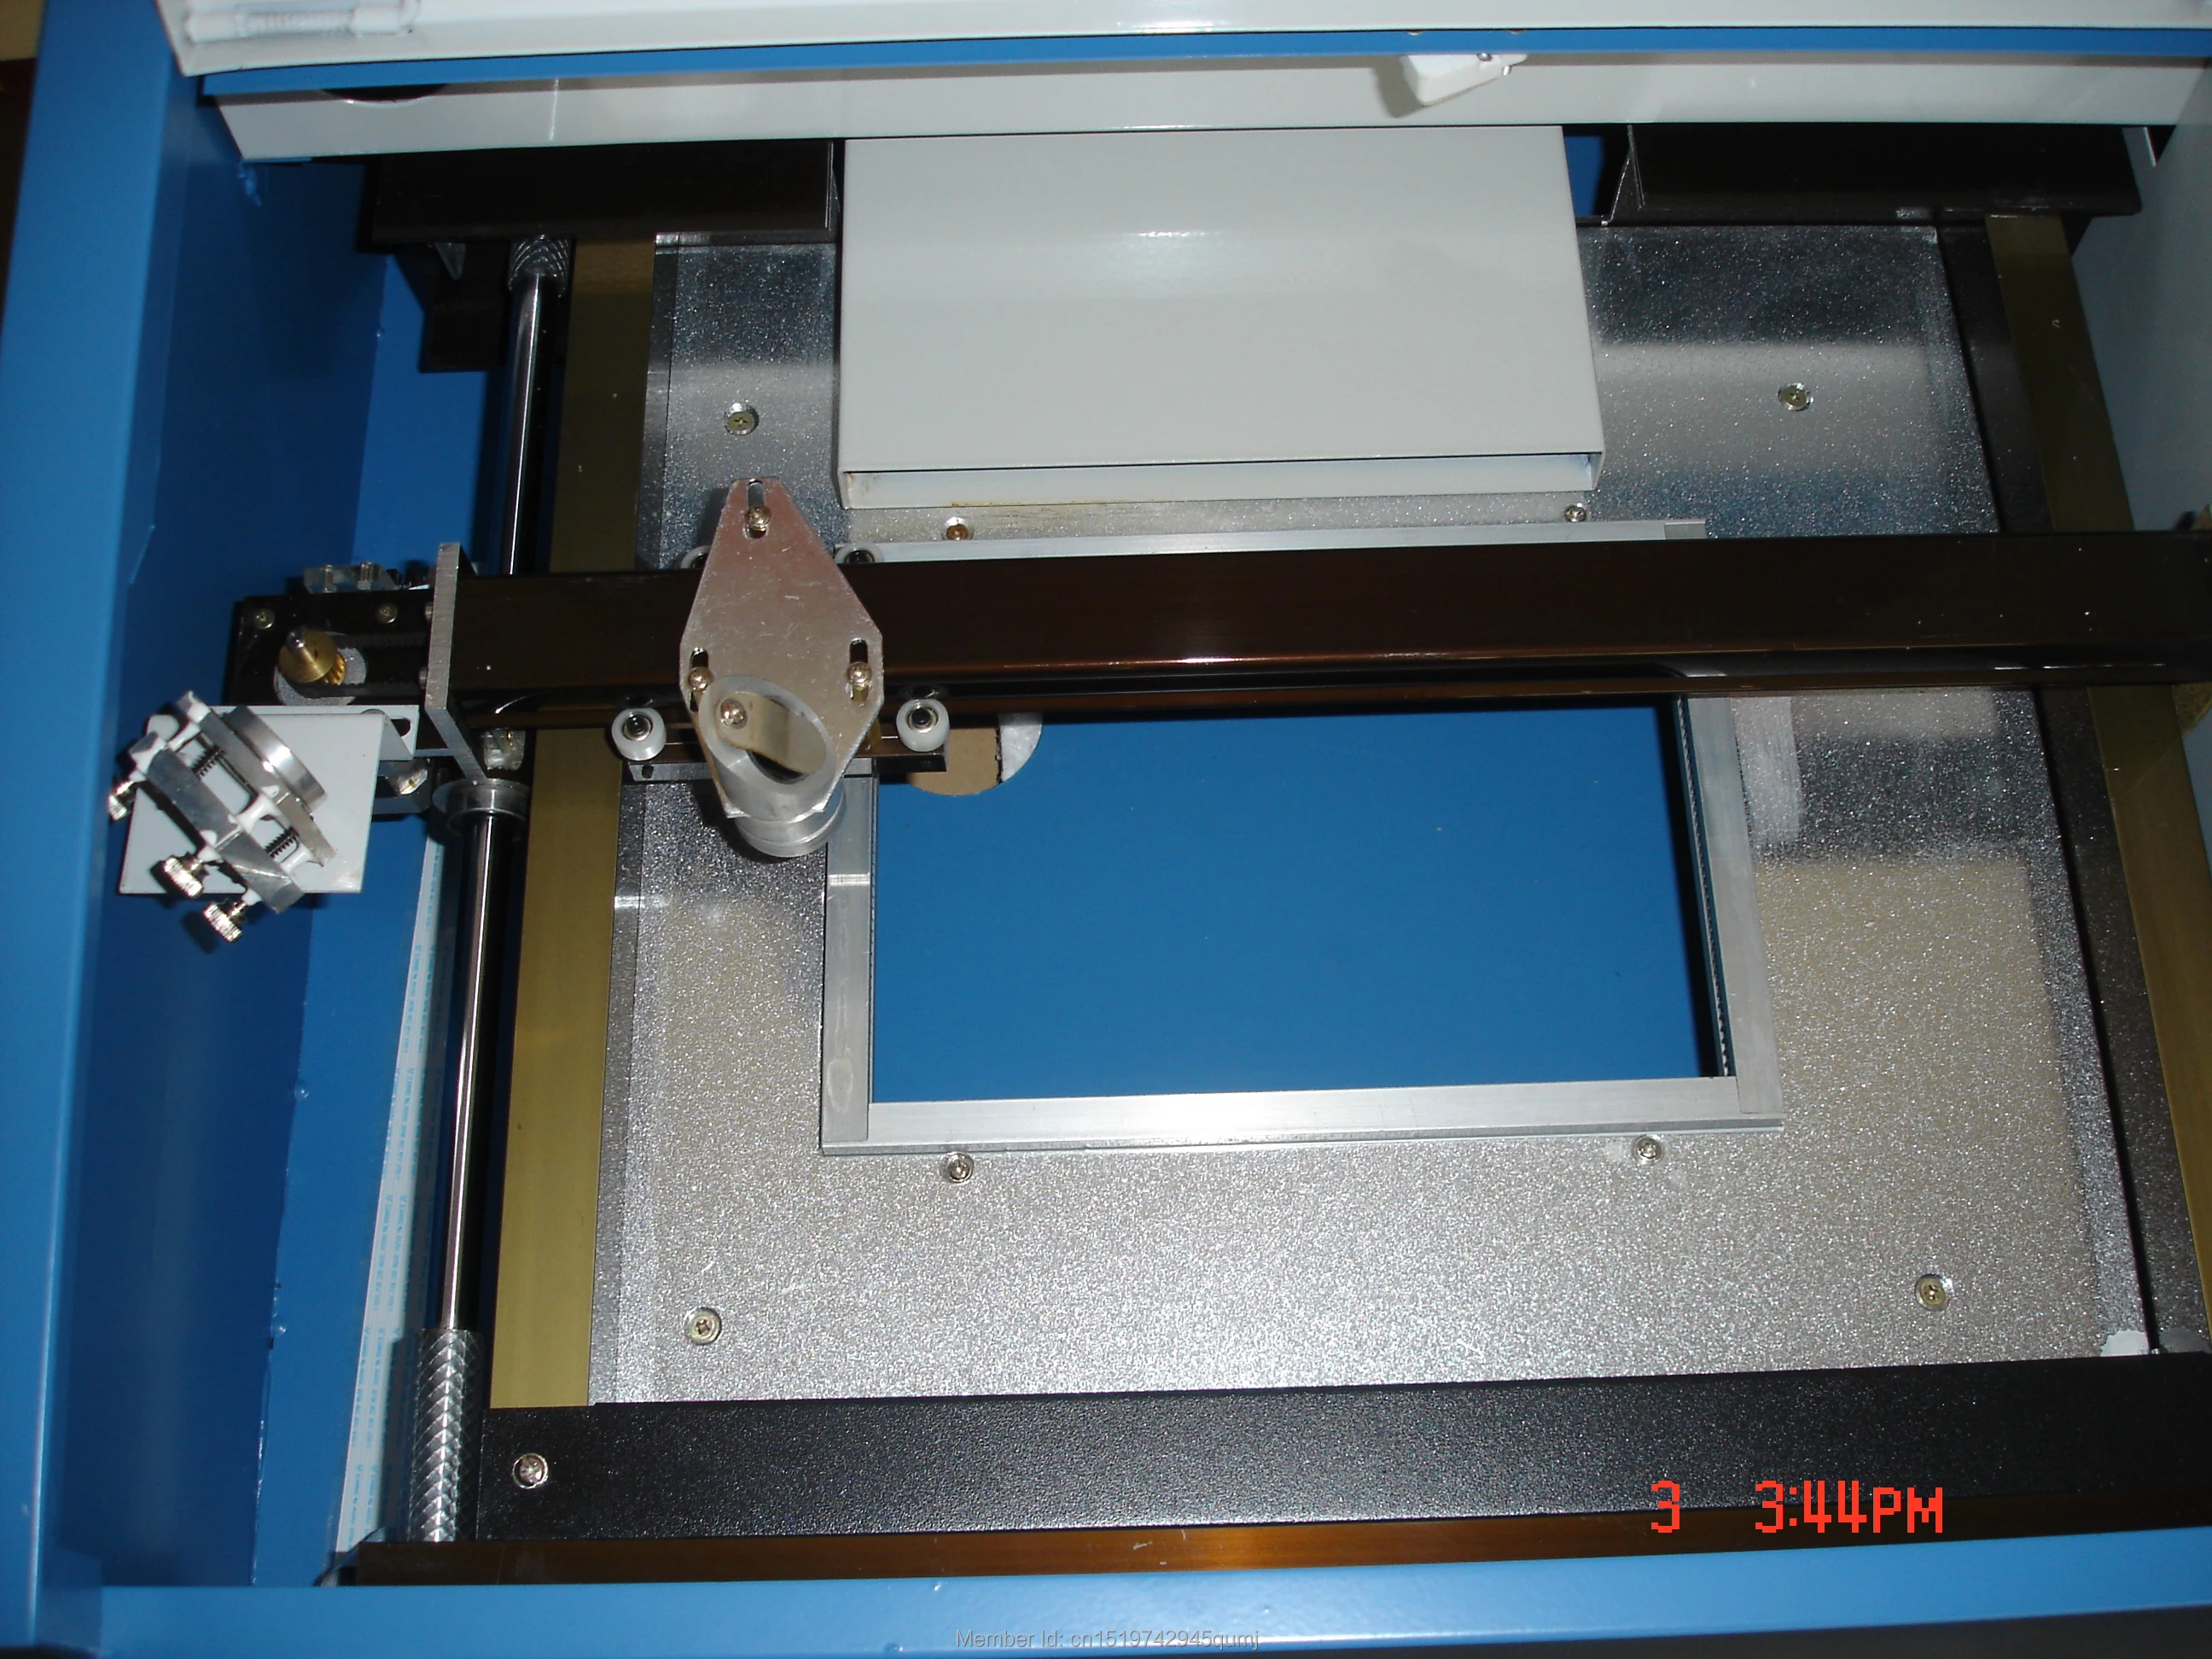 K40 2030 Diy Mini CNC Engraving Machine Laser Engraving Wood Router Engraver With digital display panel